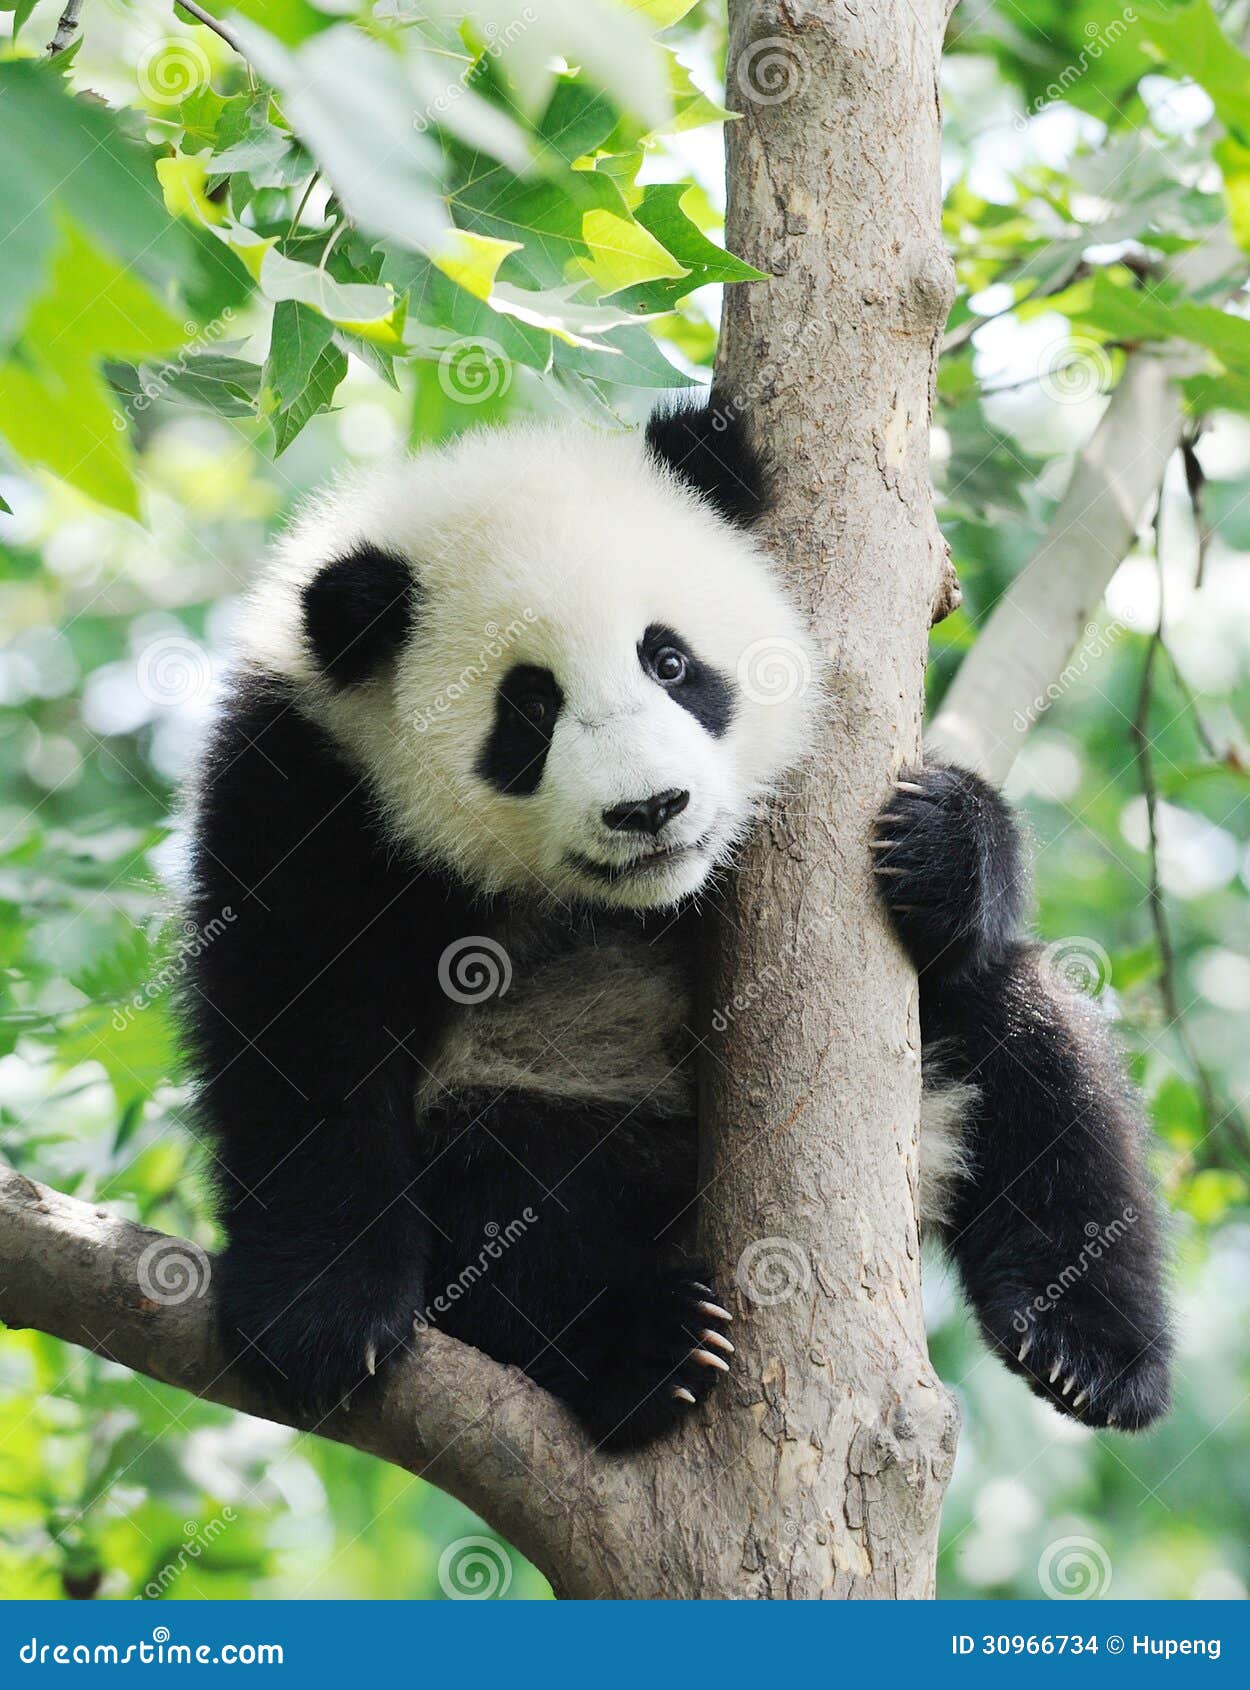 baby panda on the tree